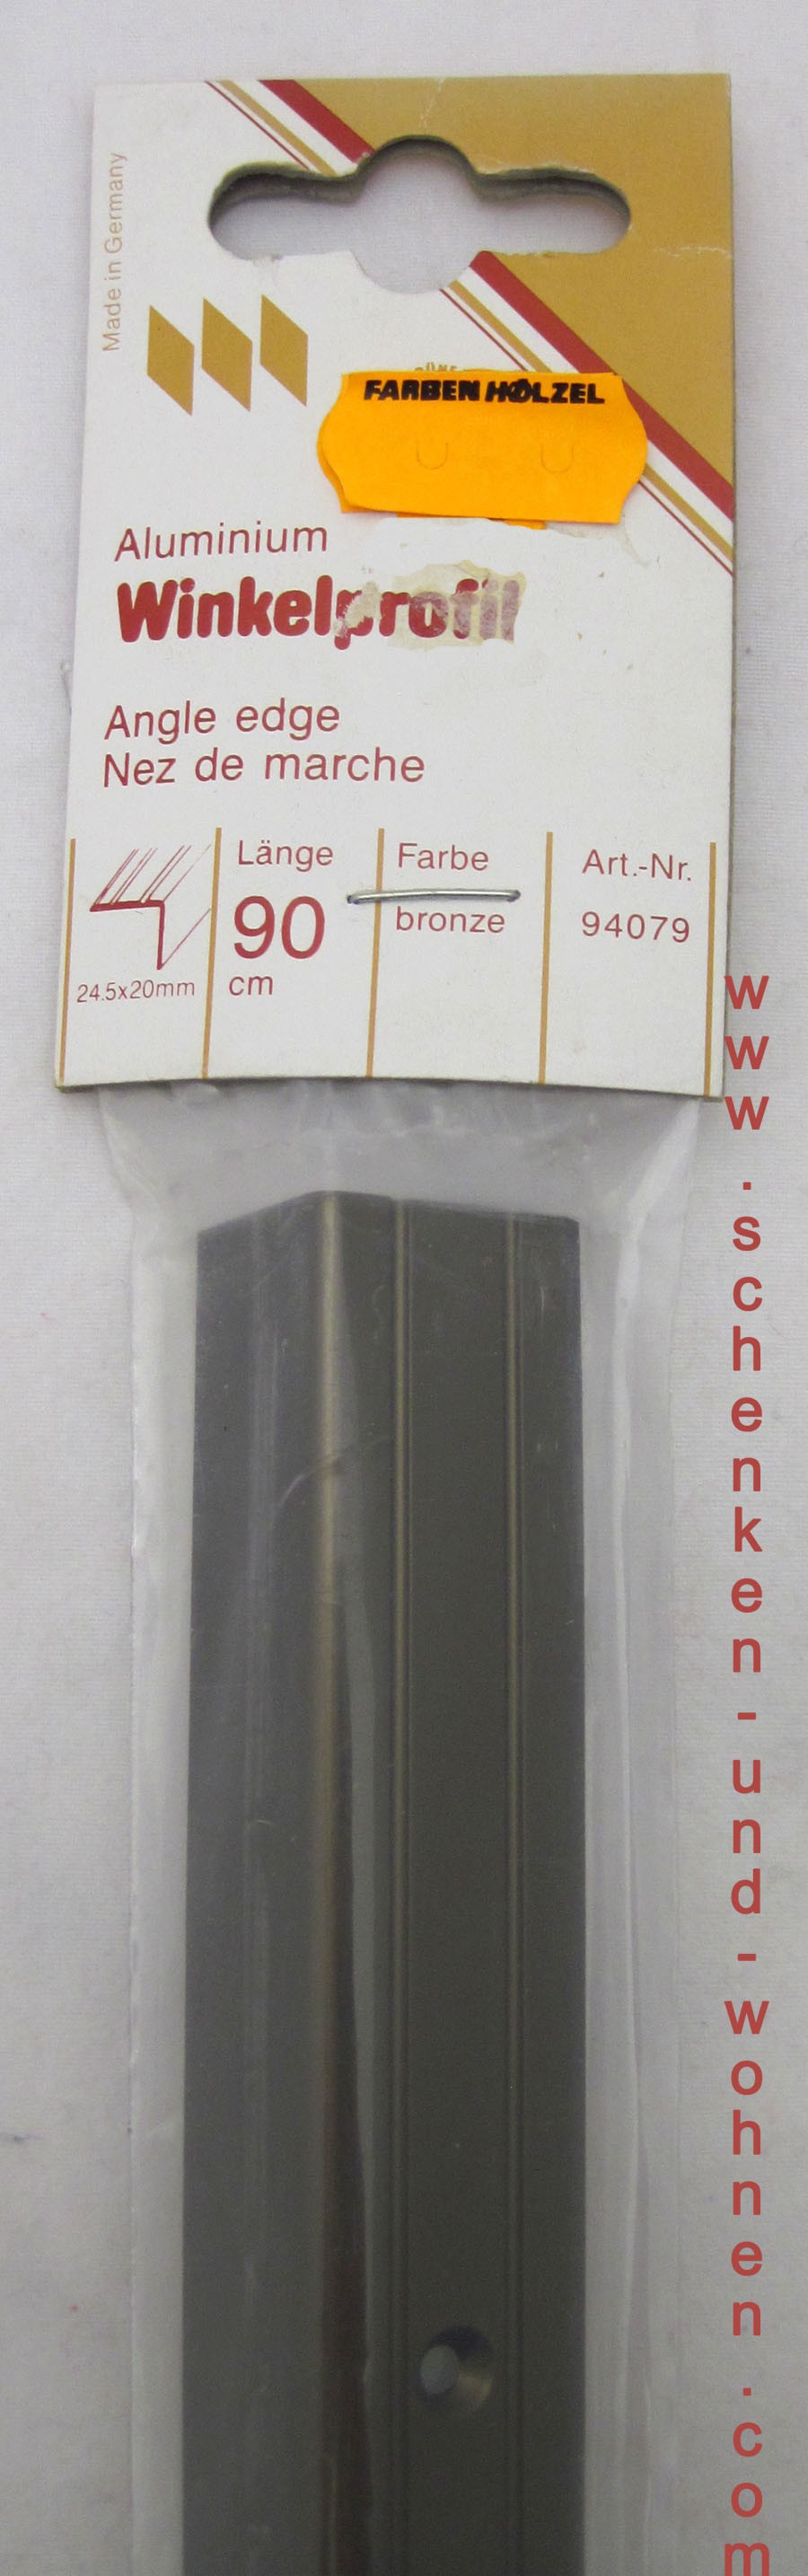 Winkelprofil Bodenprofil bronze dunkel 24,5x20mmx90 cm